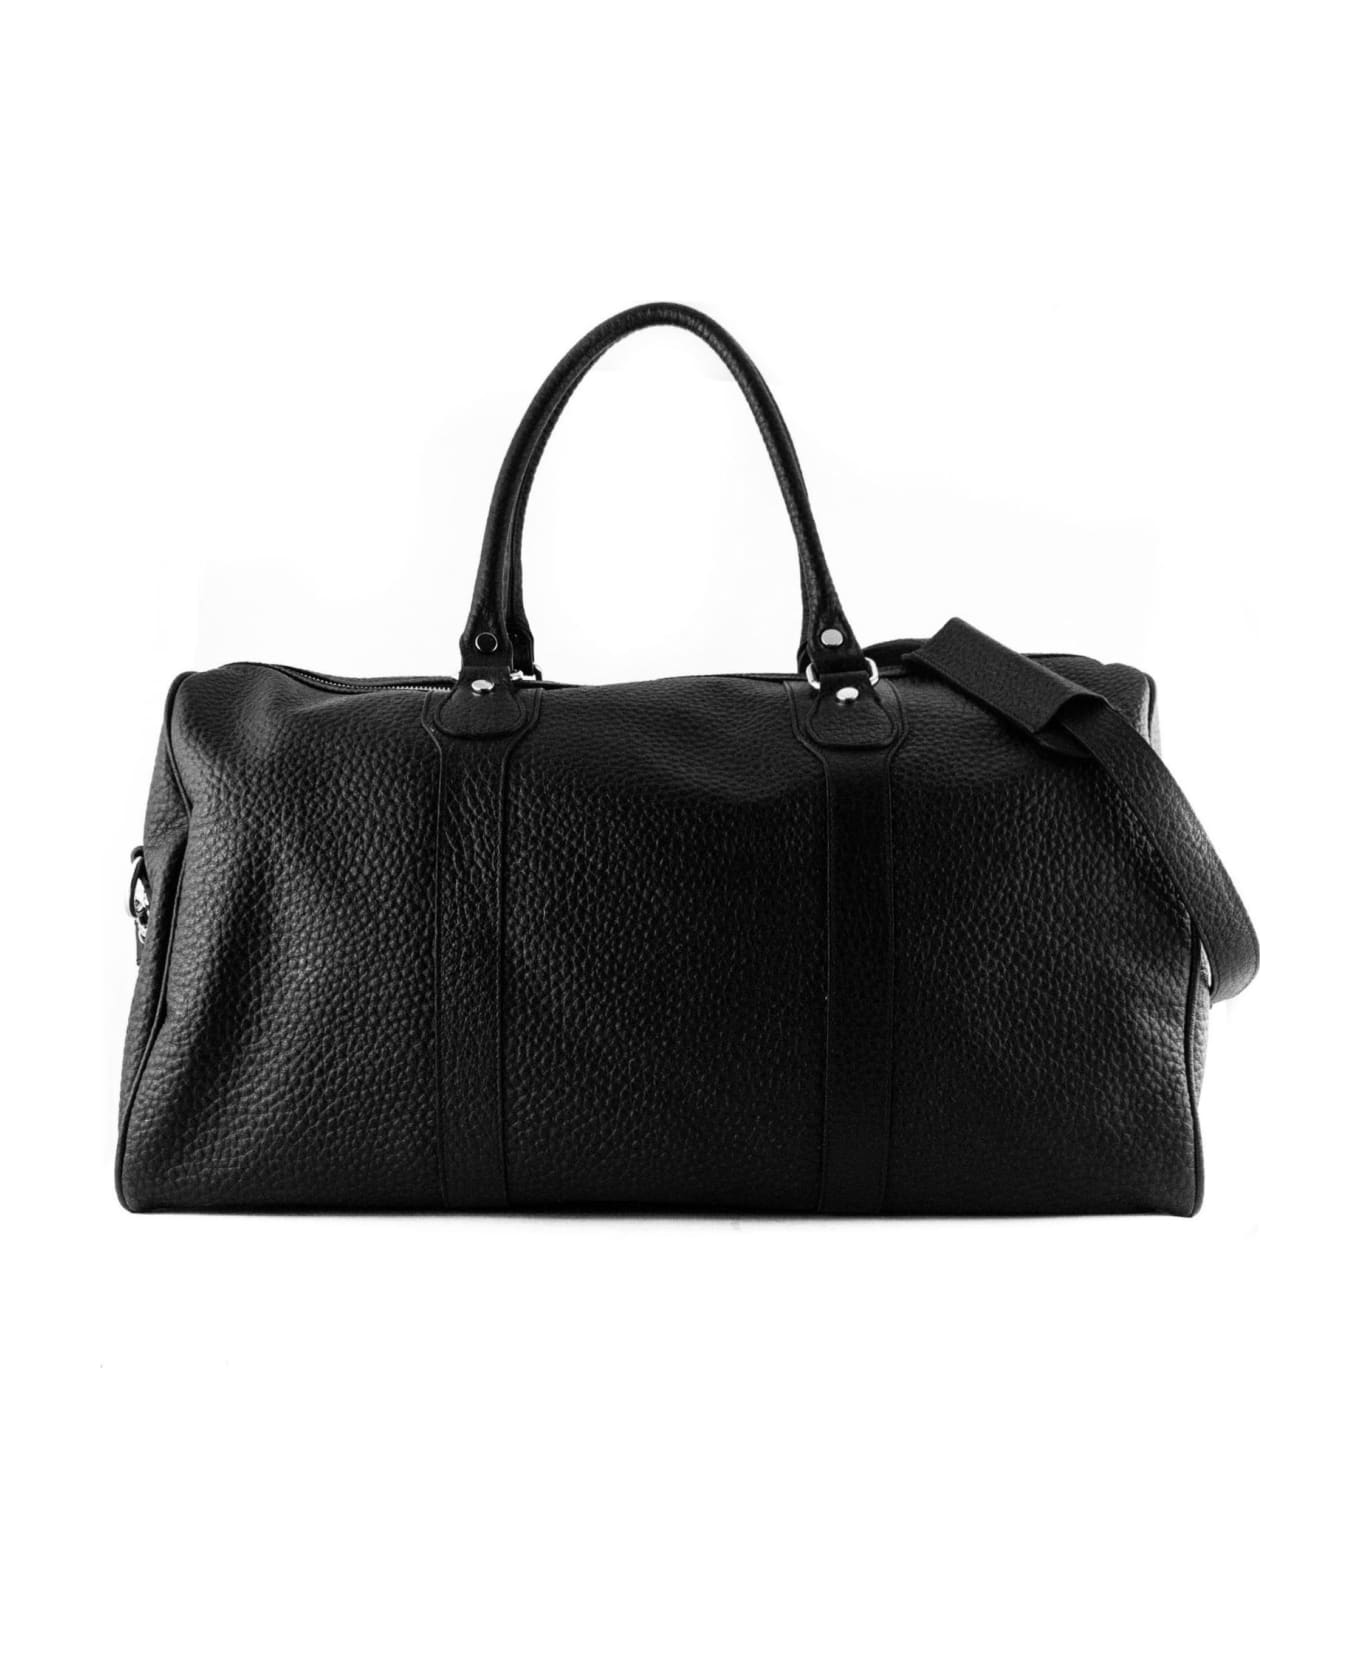 Avenue 67 Black Leather Duffel Bag - Black トラベルバッグ